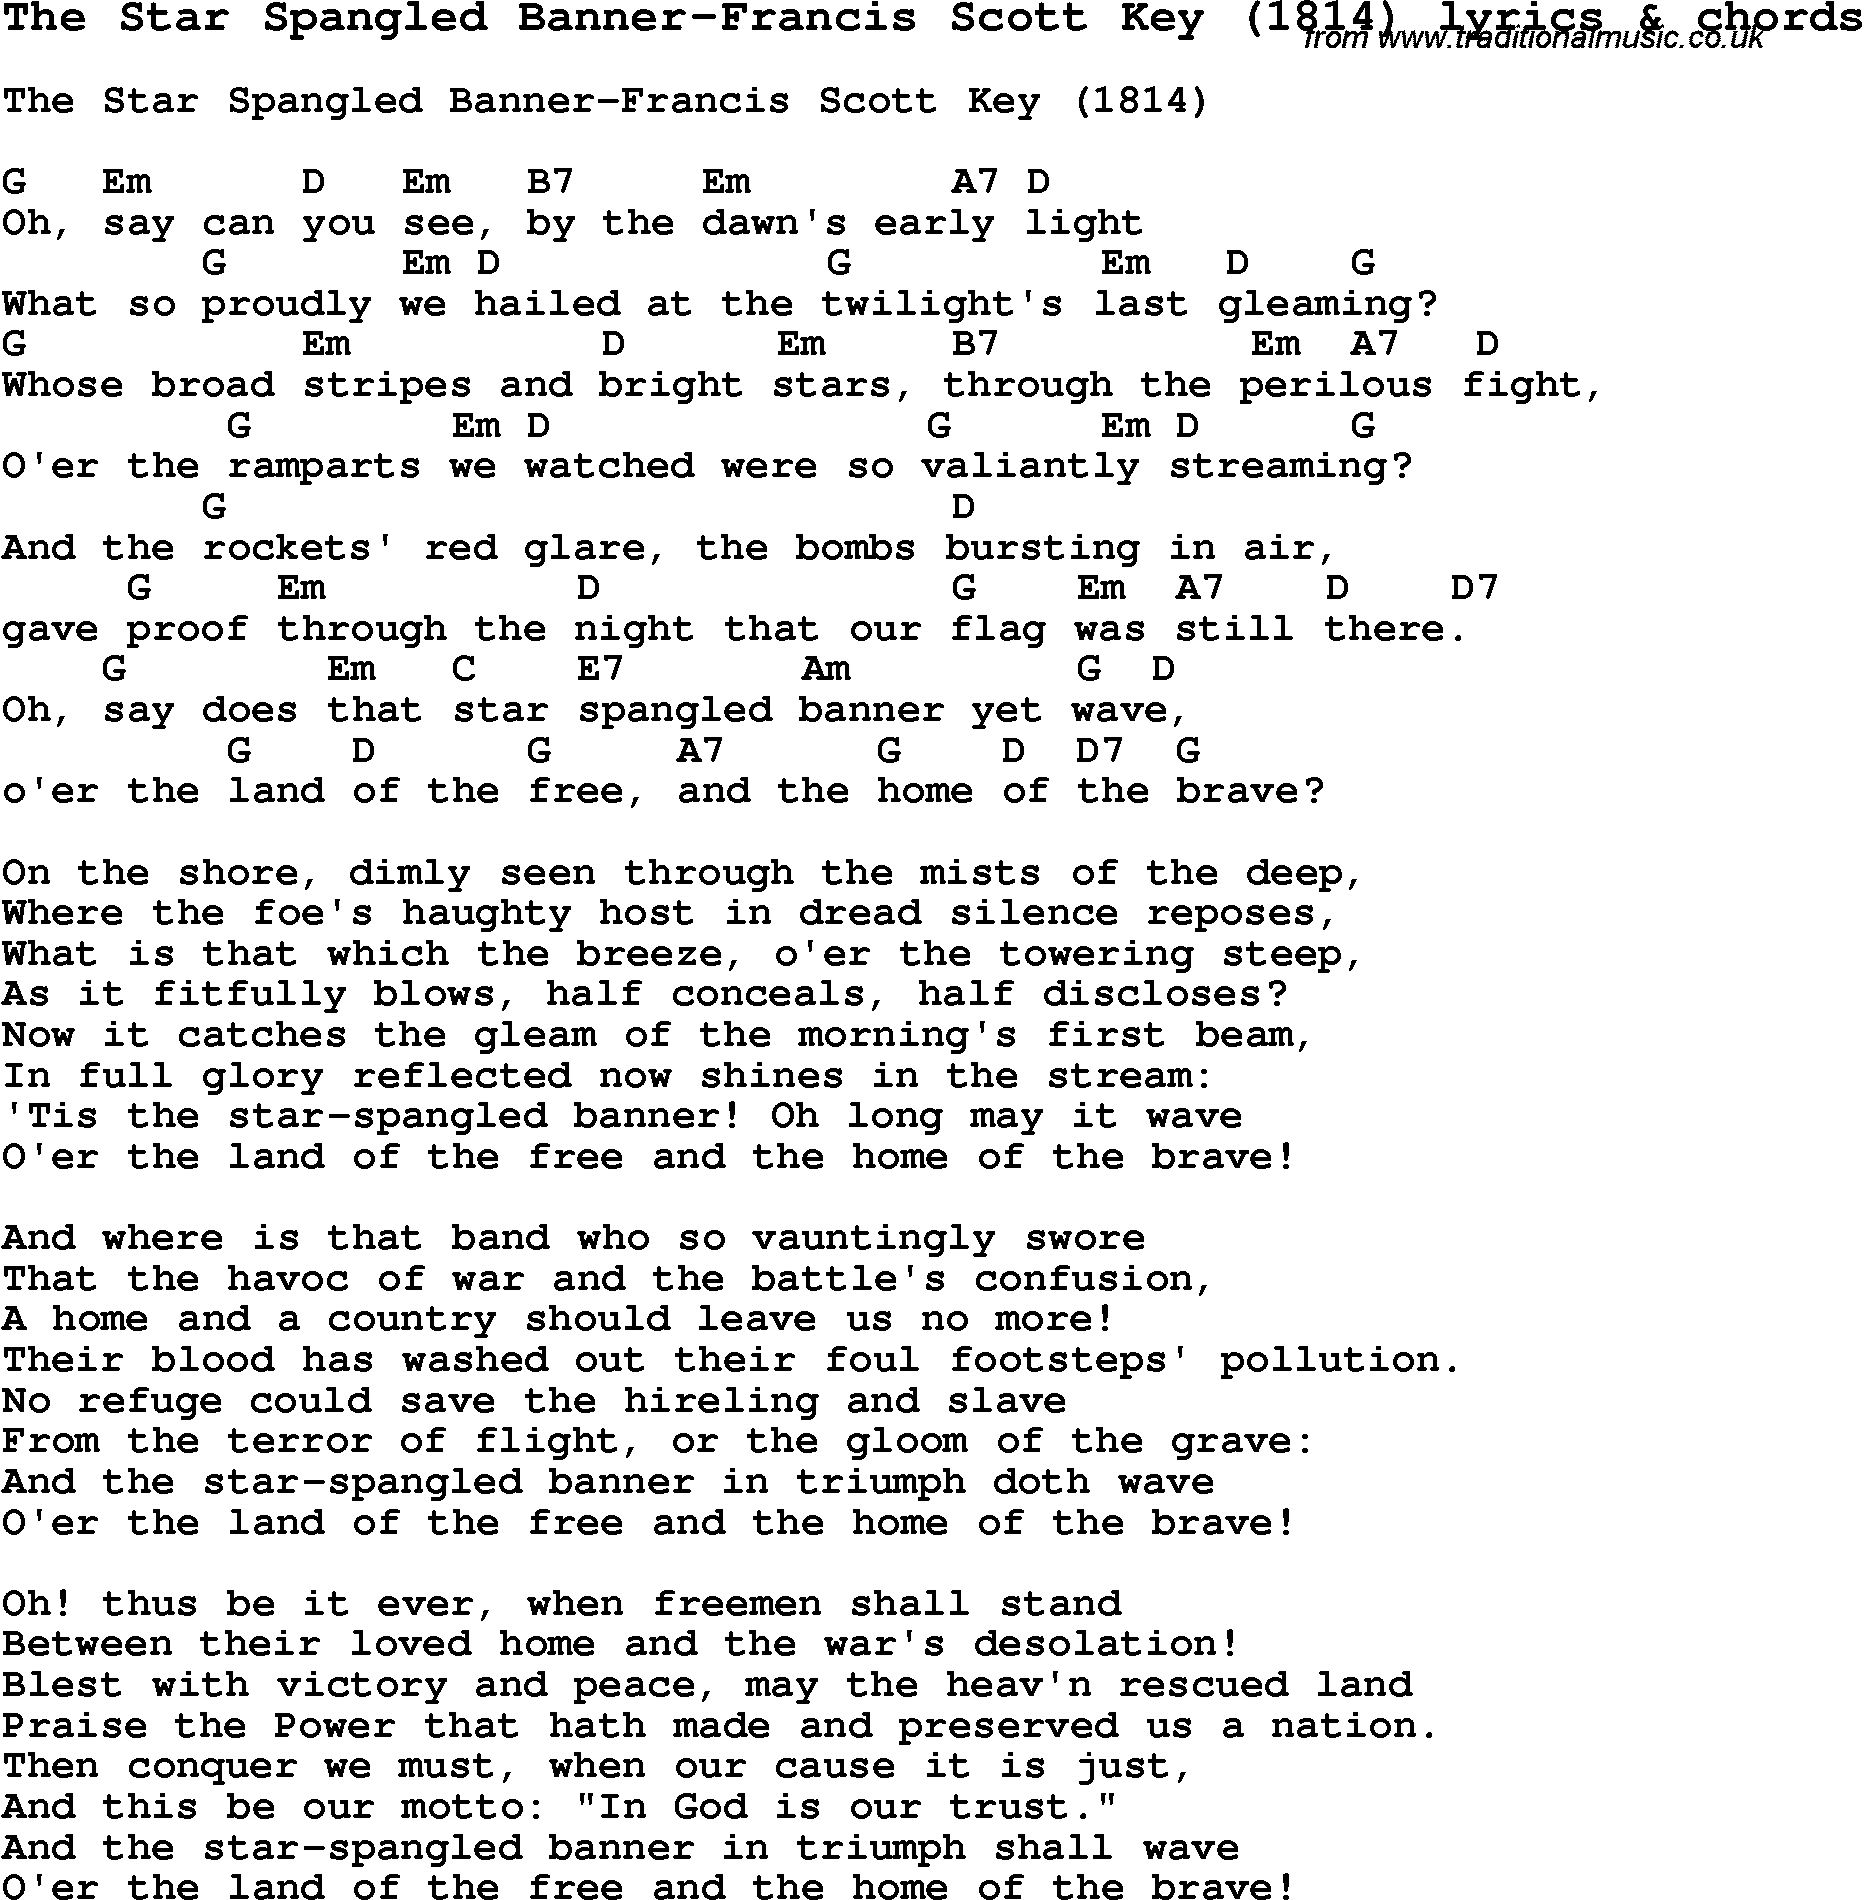 Love Song Lyrics for: The Star Spangled Banner-Francis Scott Key (1814) with chords for Ukulele, Guitar Banjo etc.